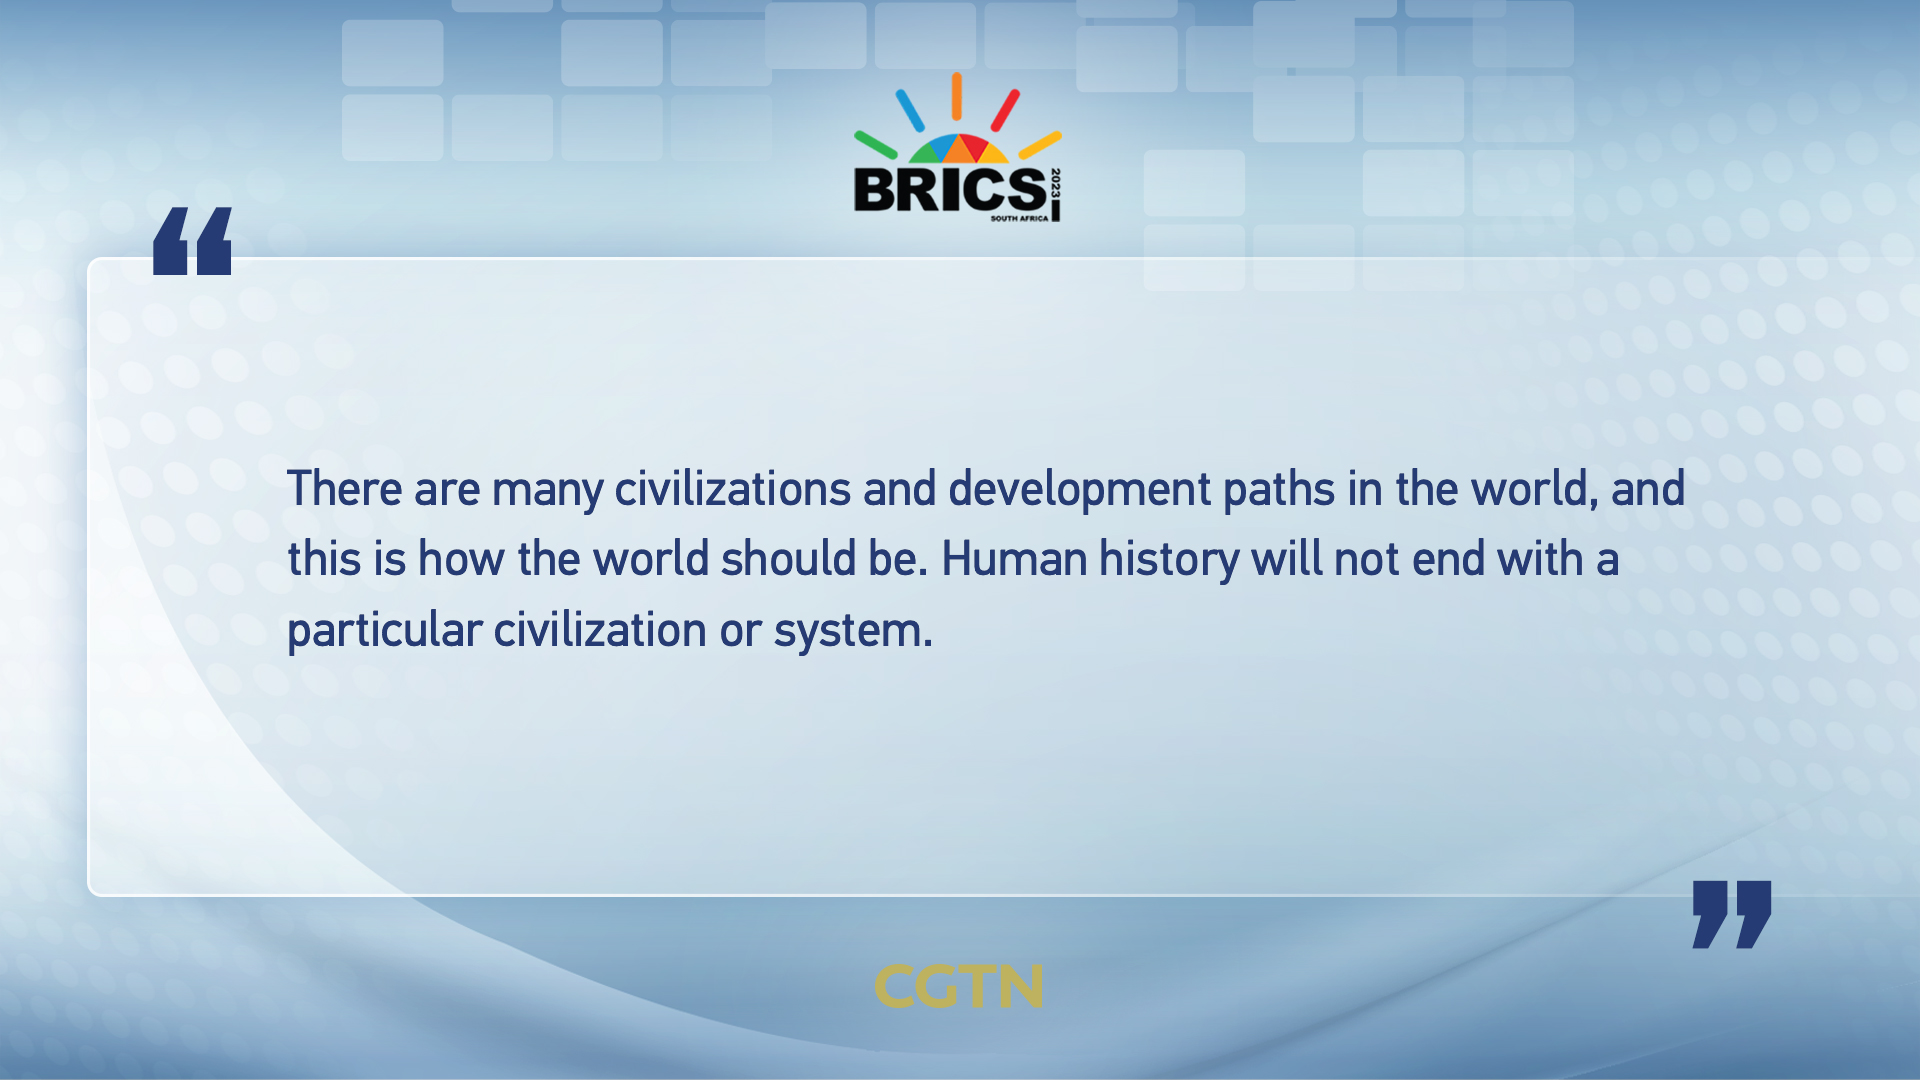 Xi Jinping's key quotes at the 15th BRICS Summit